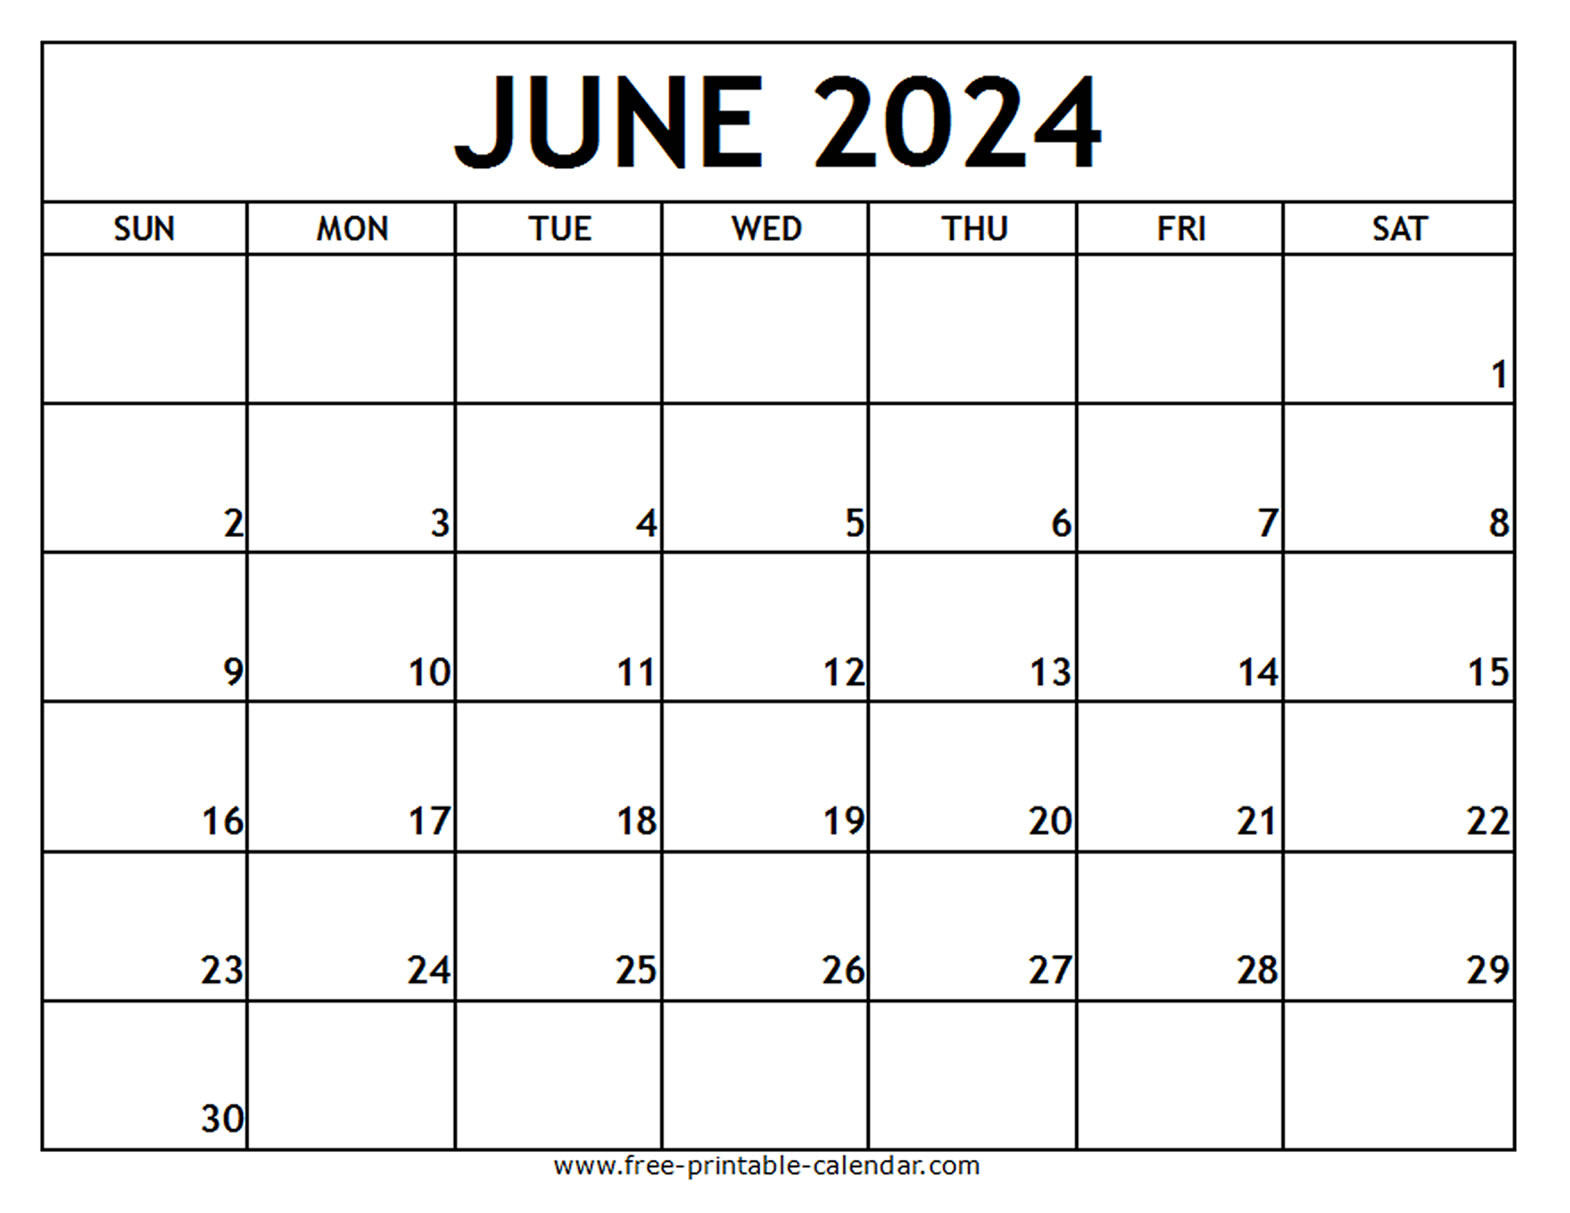 June 2024 Printable Calendar - Free-Printable-Calendar with regard to Free June 2024 Calendar